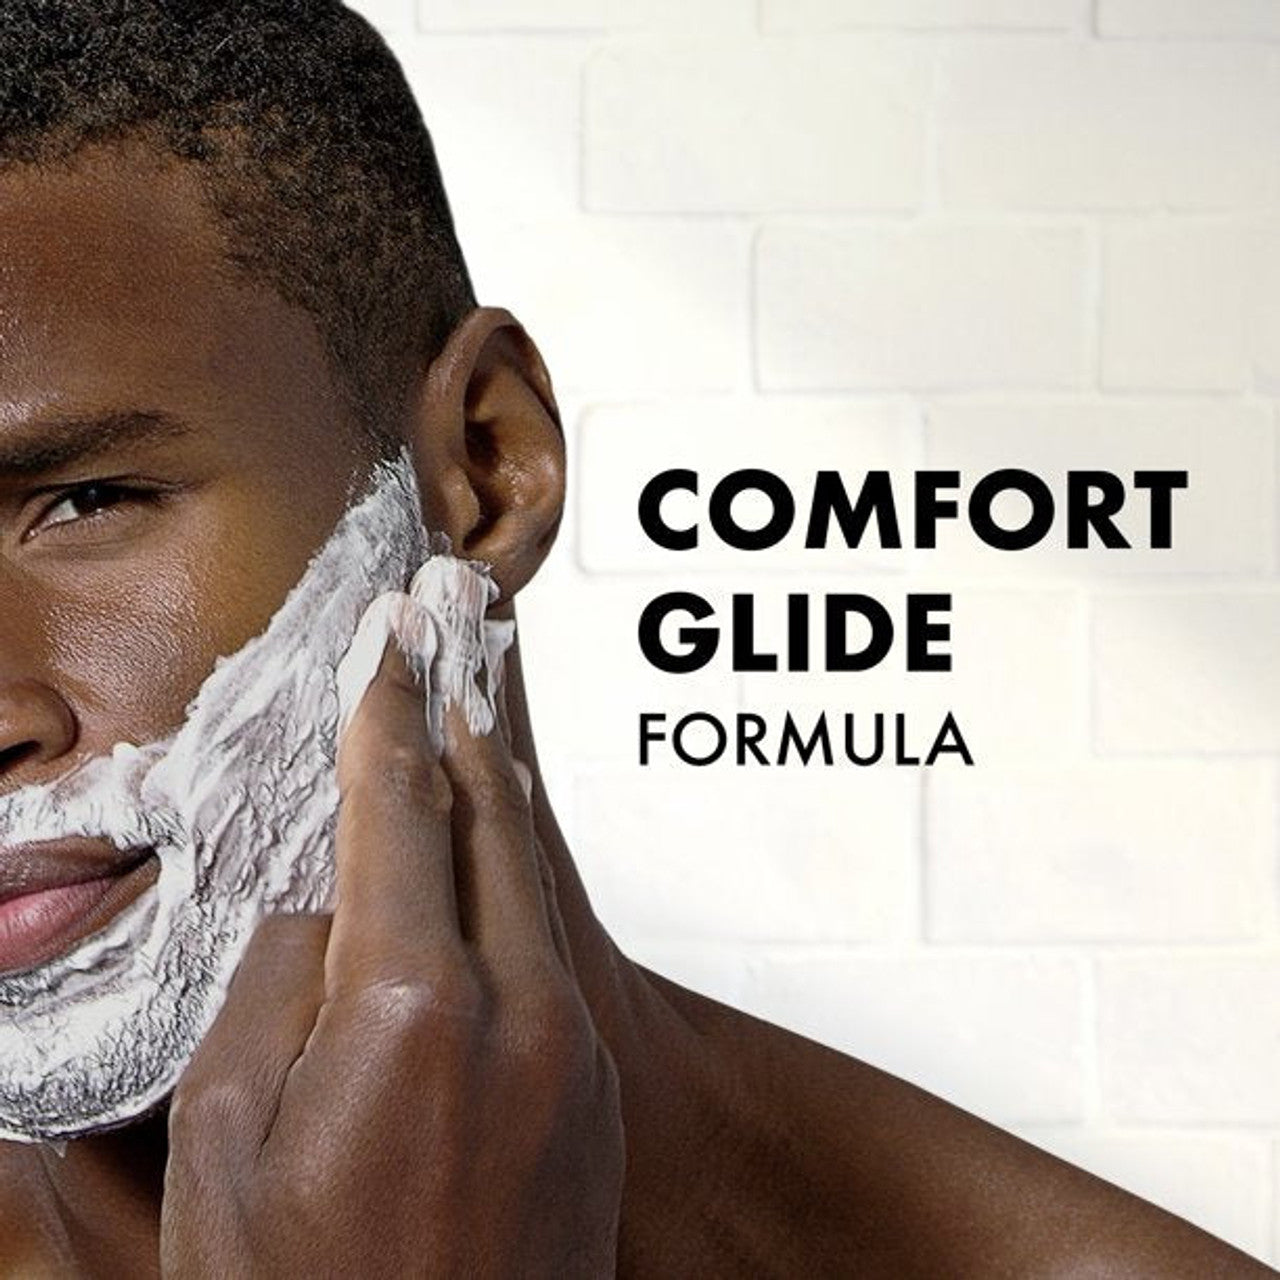 L'Oreal Men Expert Hydra Sensitive Shaving Gel